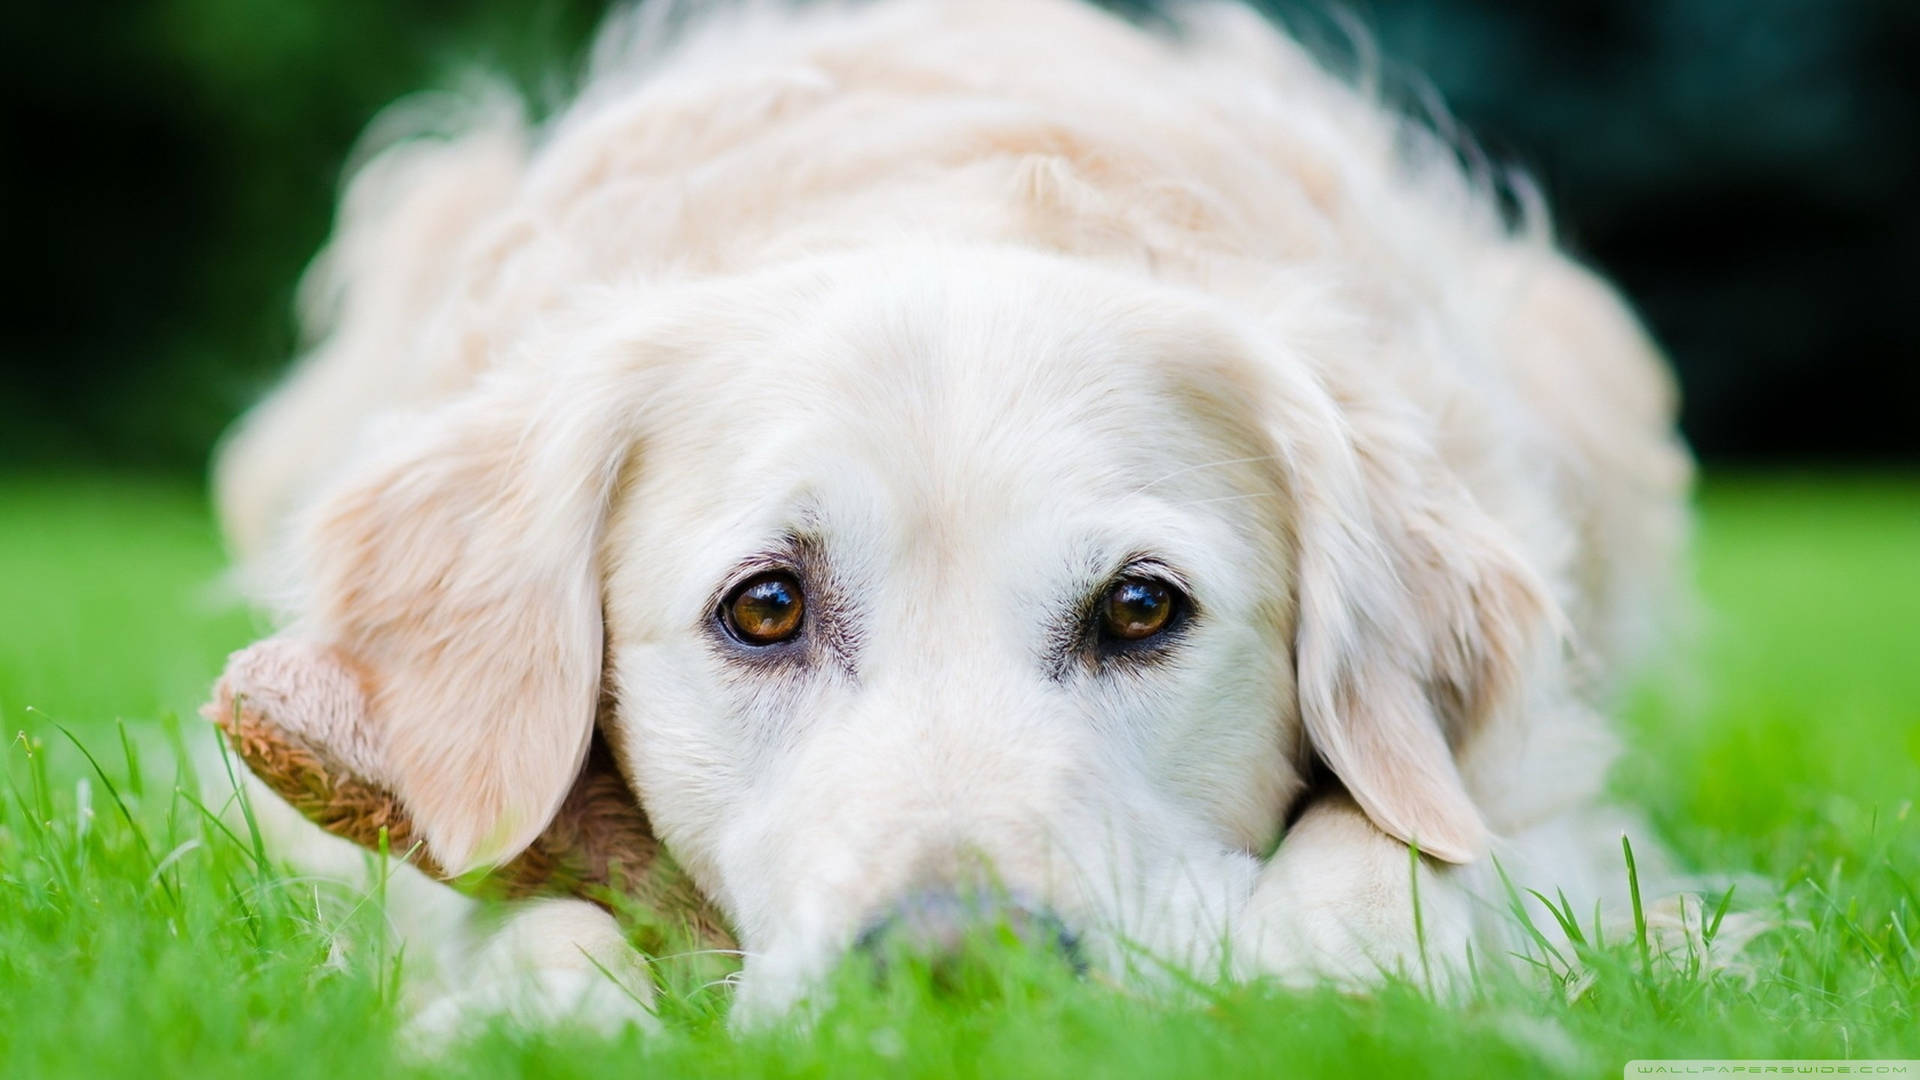 Cute White Kuvasz Dog Eyes Wallpaper